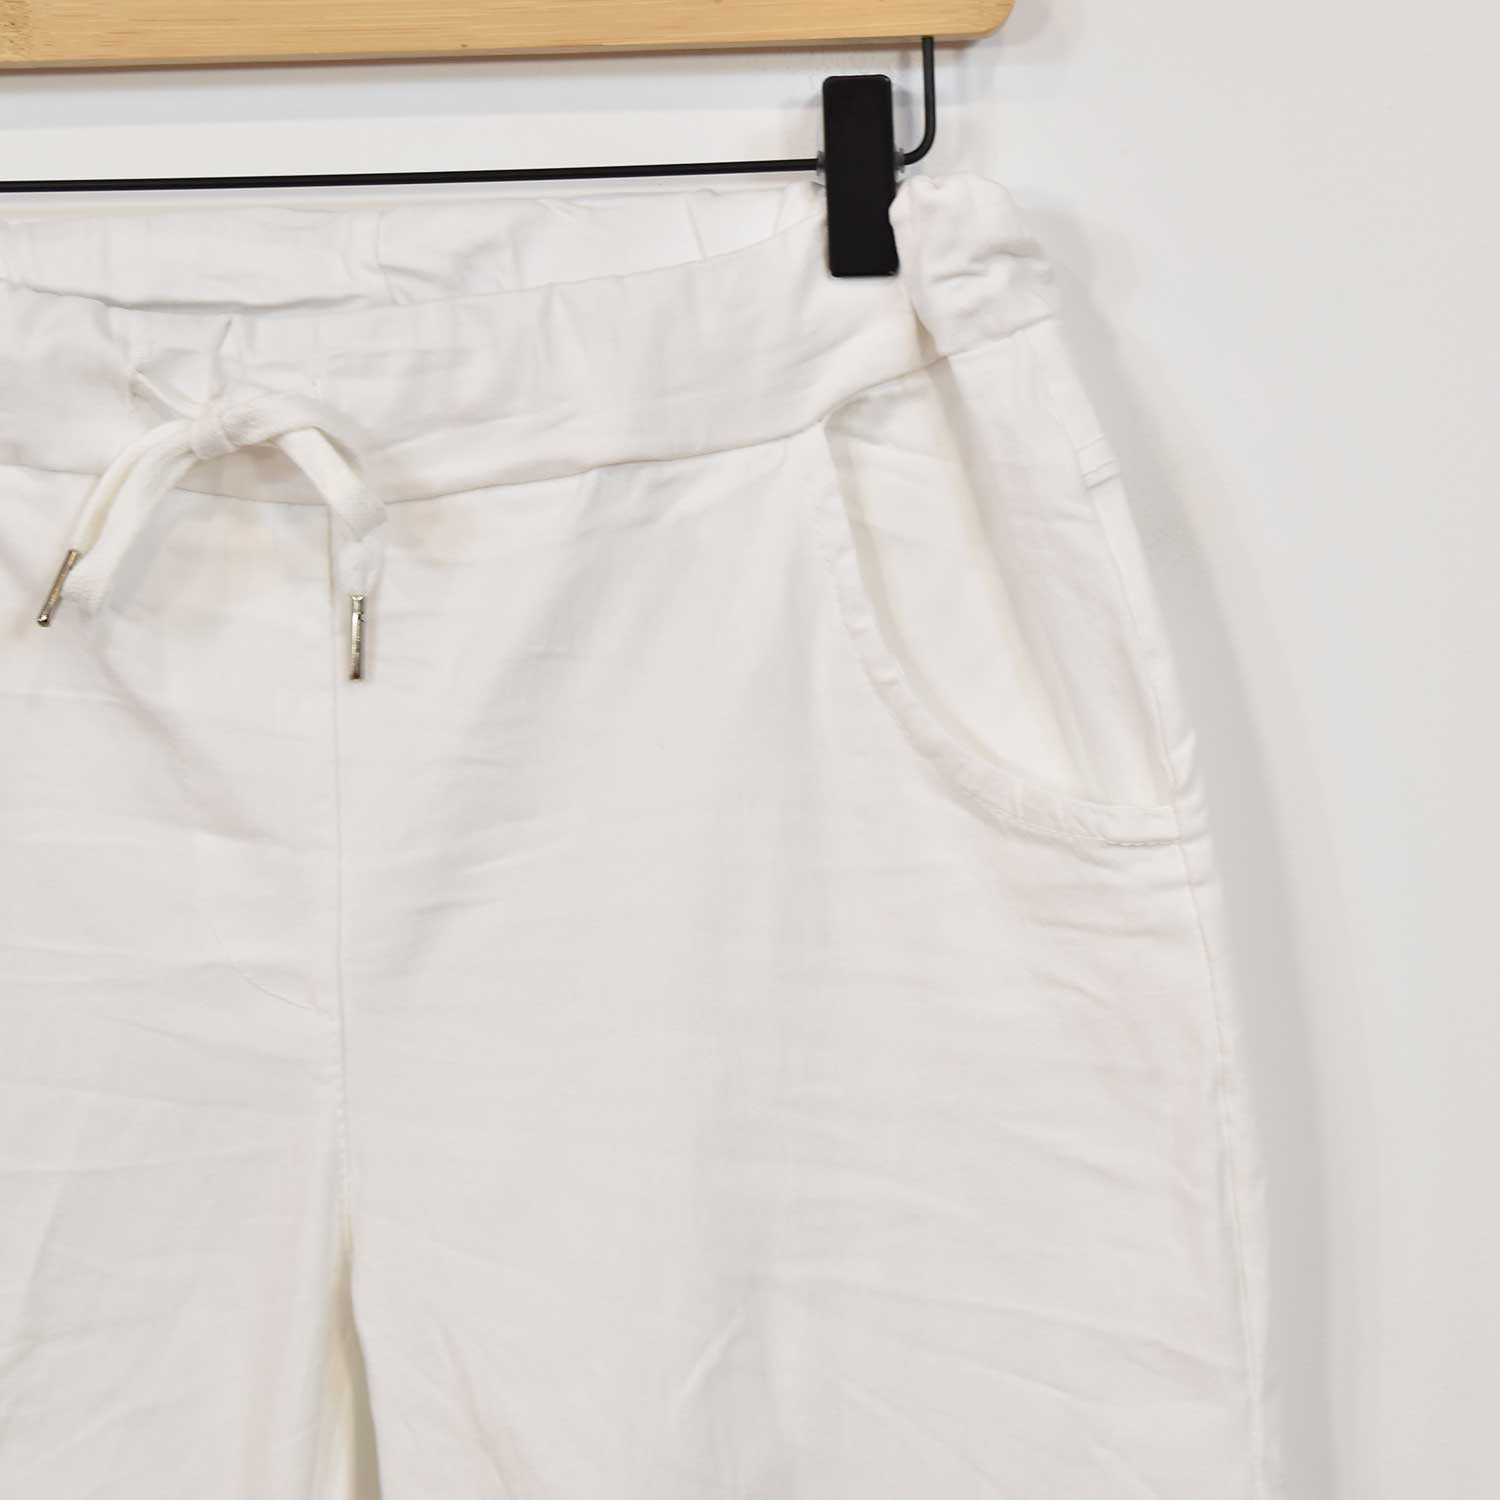 White elastic pants